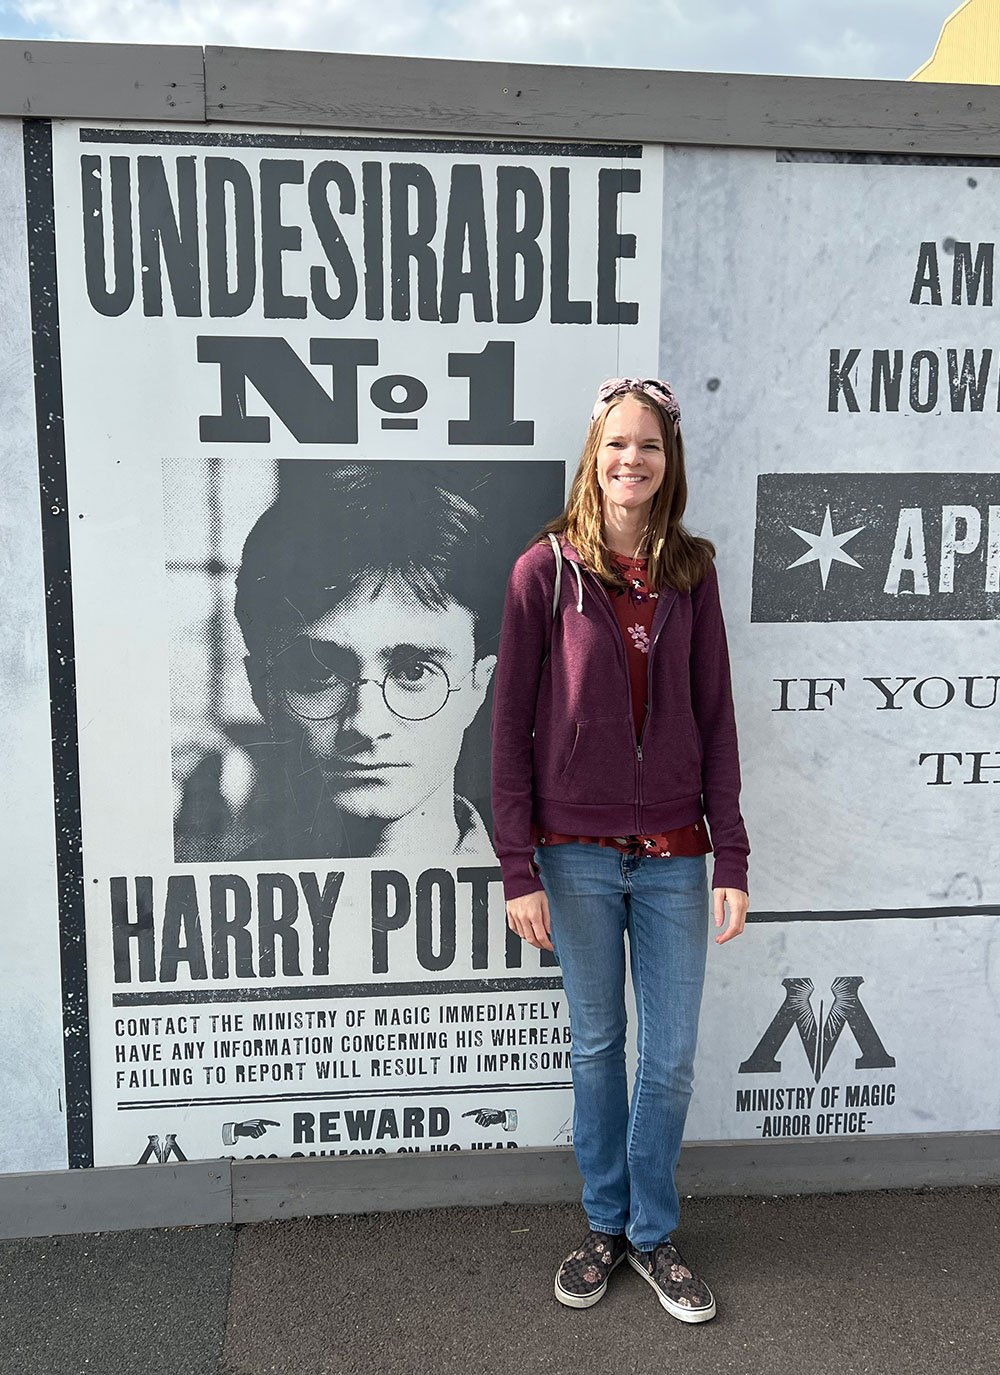 Undesirable Harry Potter poster Warner Bros. studio tour London